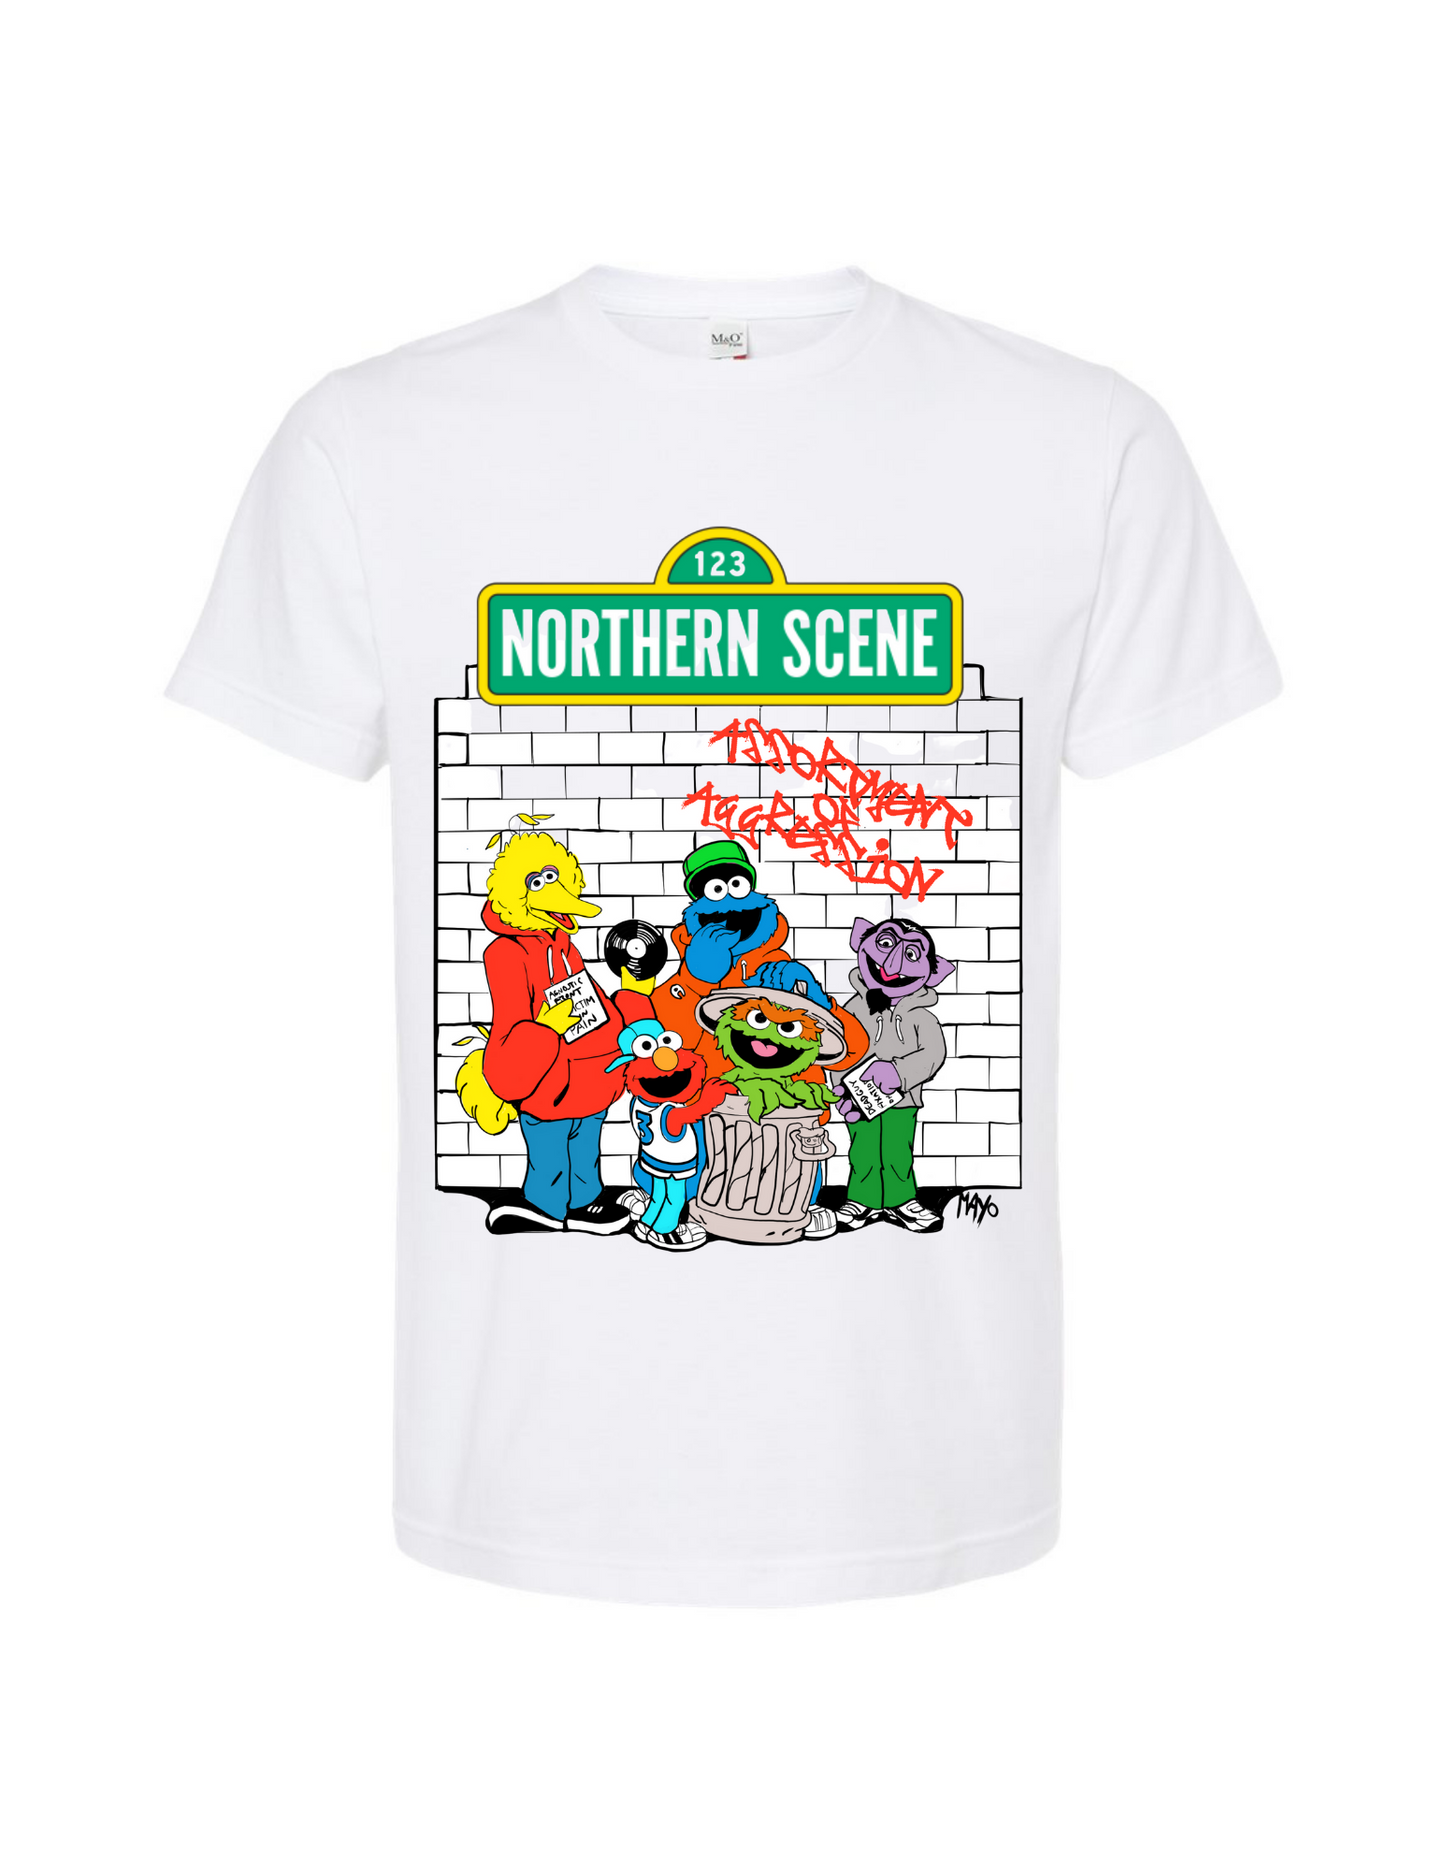 Northern Scene - Sesame Street, "Assortment of Aggression" T-Shirt